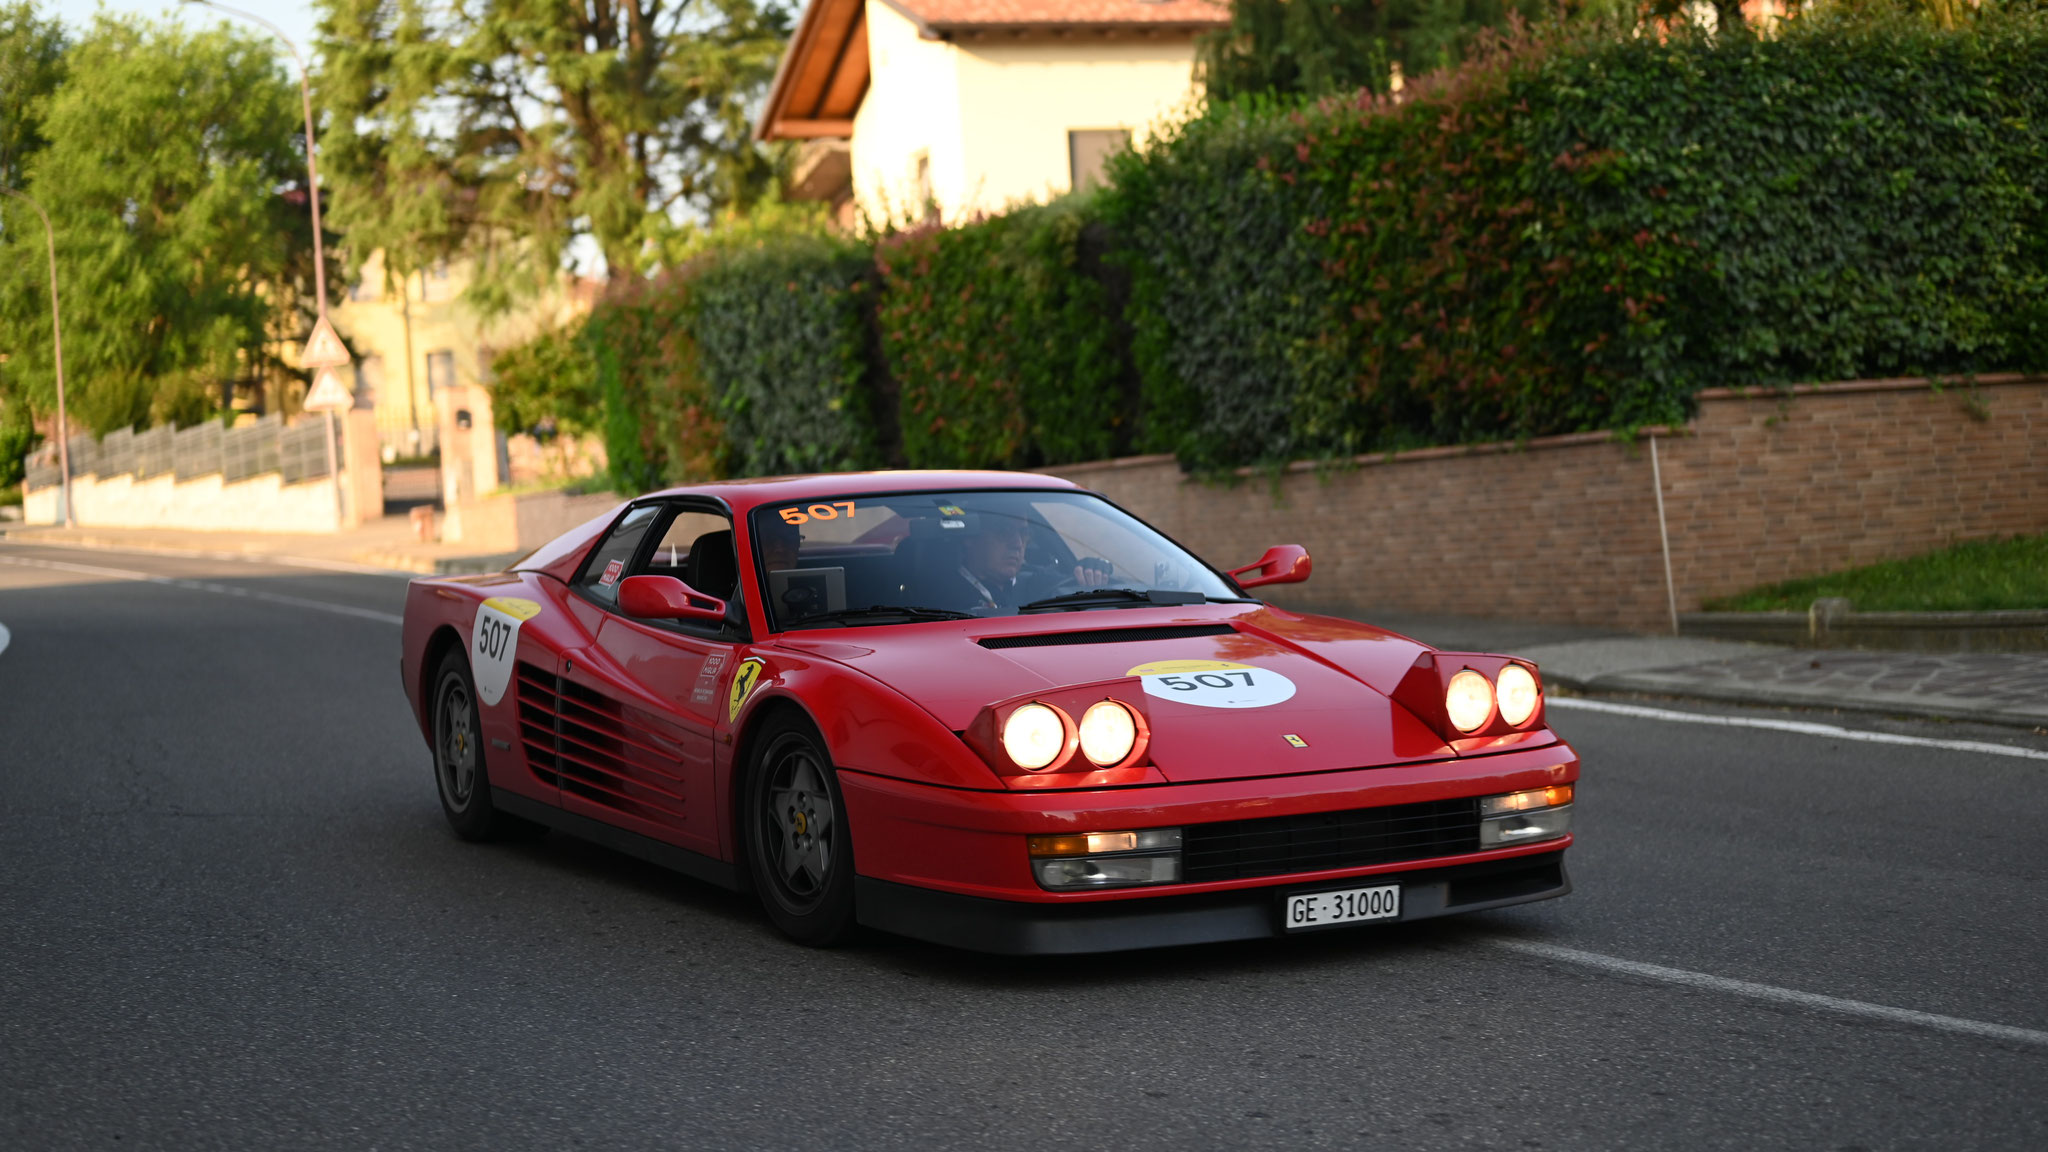 Ferrari testarossa - GE31000 (CH)